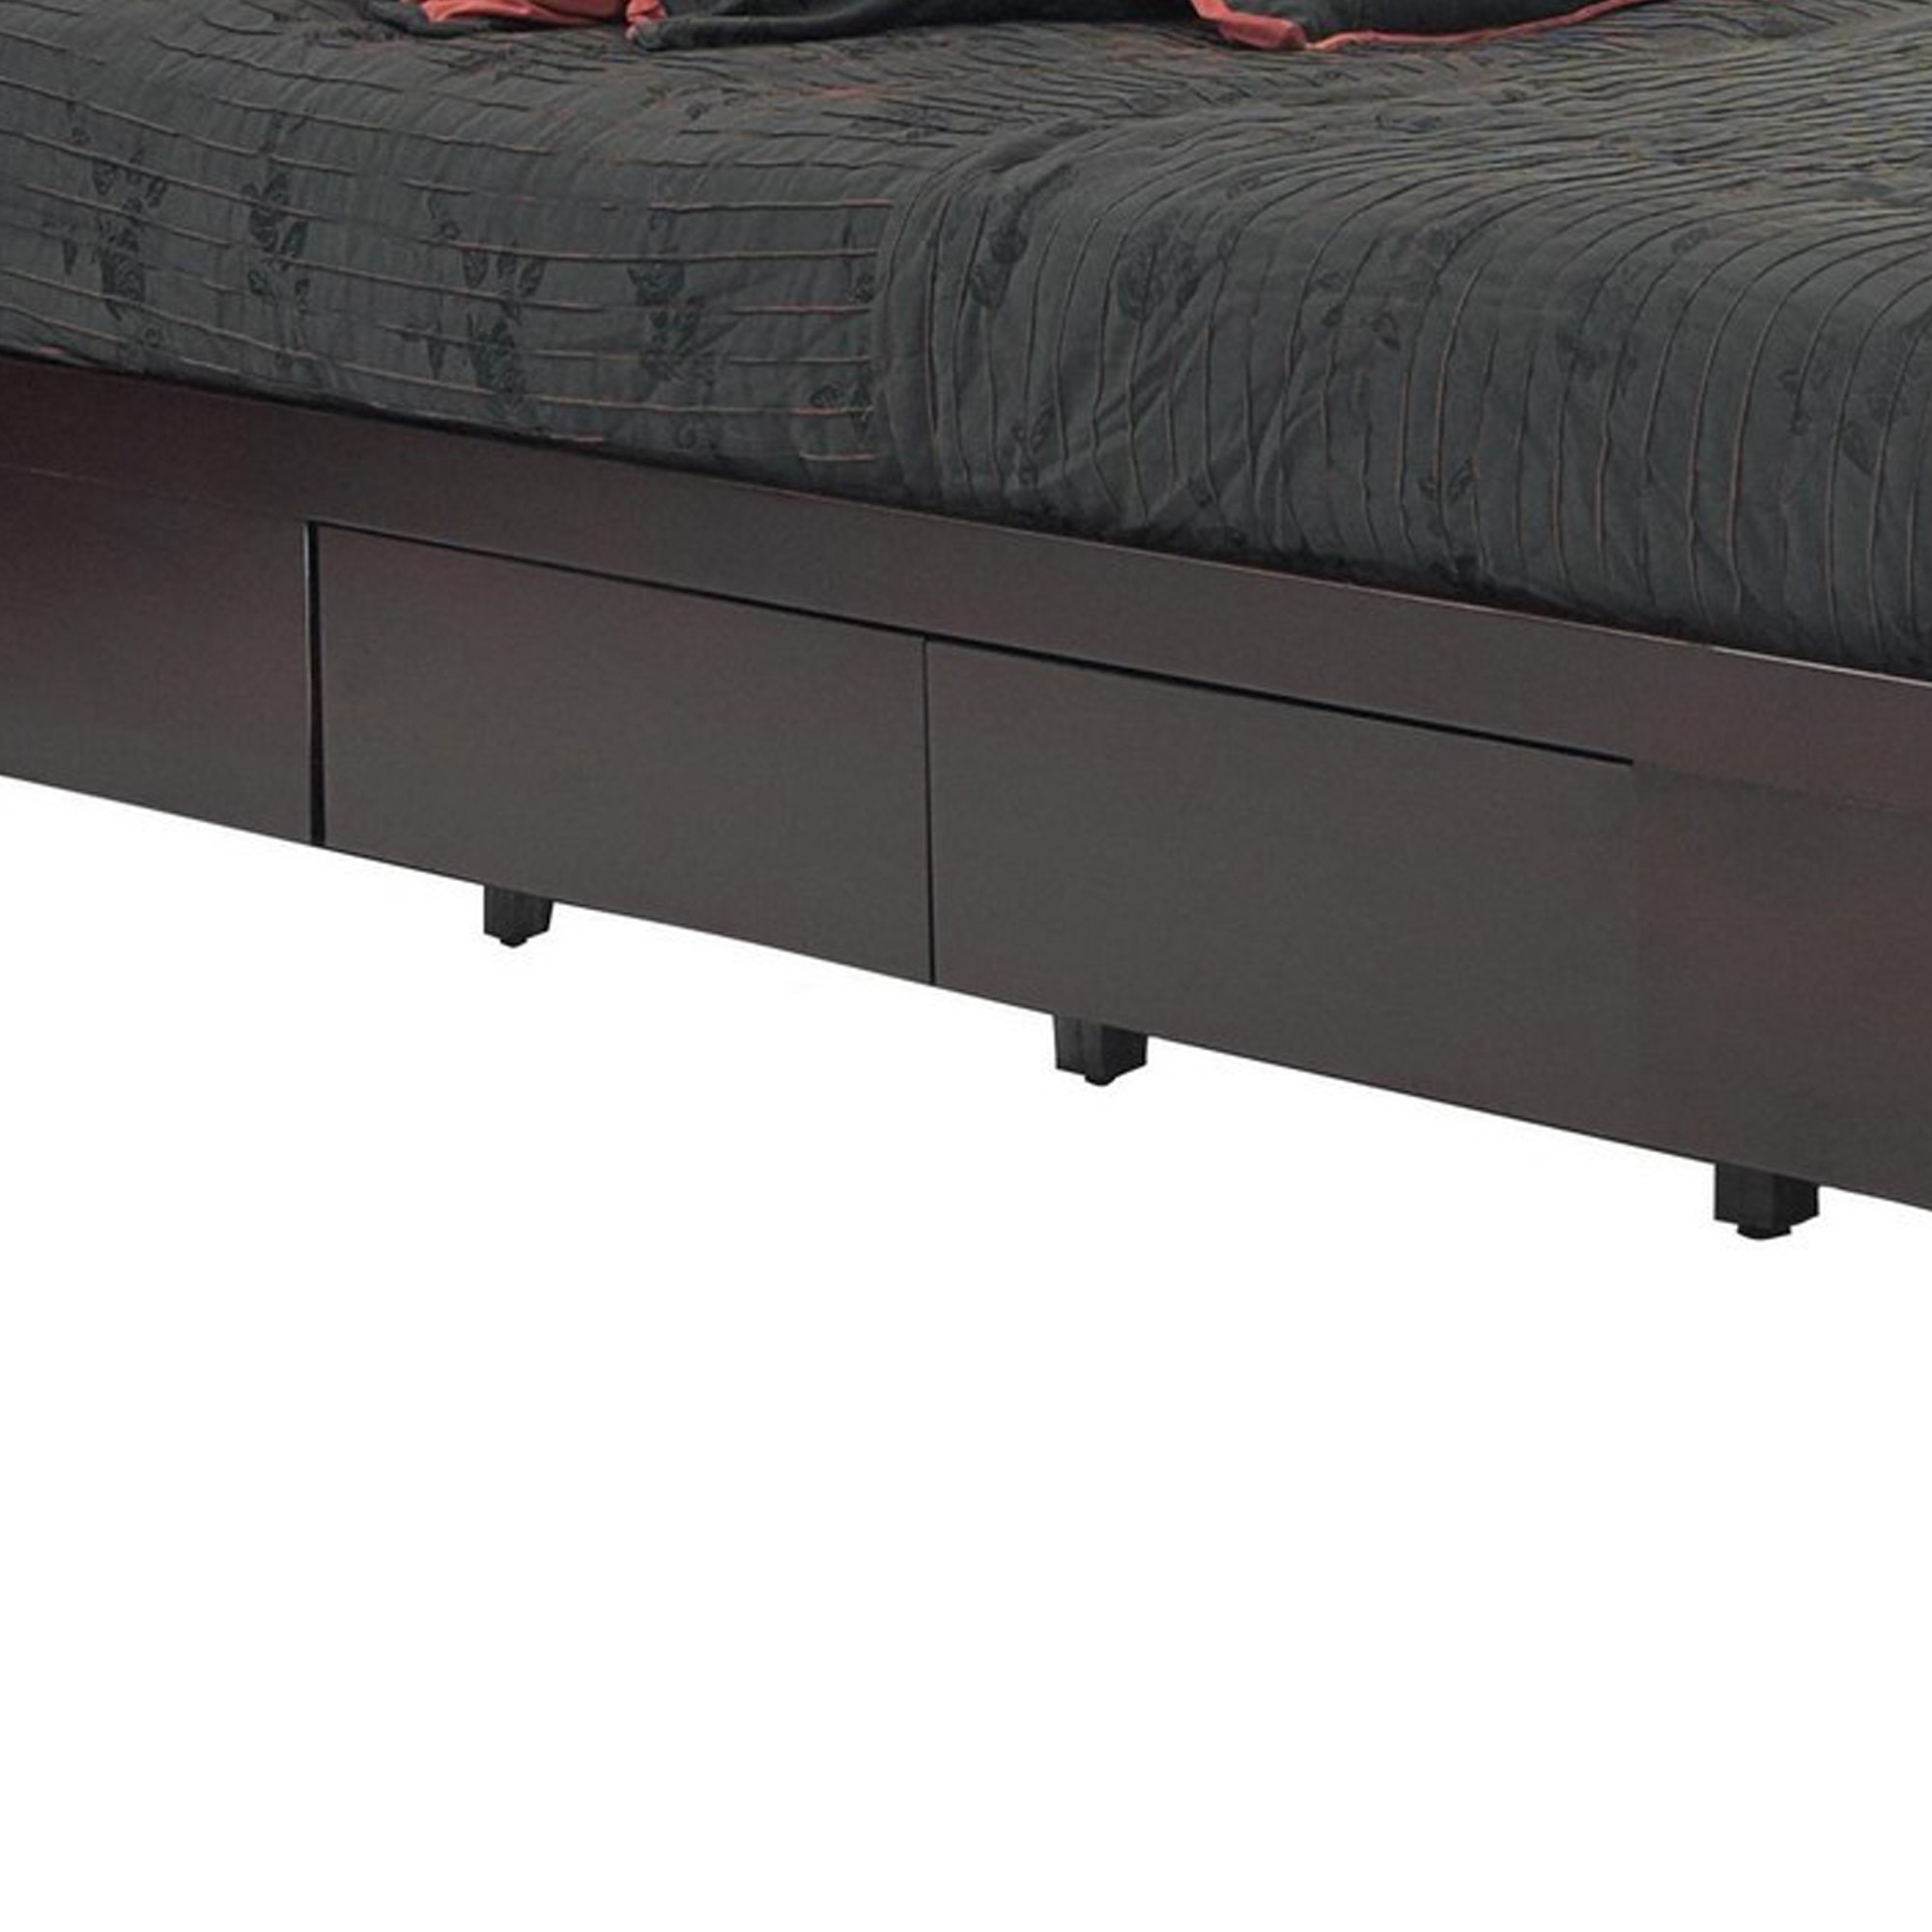 Klio Twin Size Bed, 4 Storage Drawers, Low Profile, Dark Brown Mahogany- Saltoro Sherpi